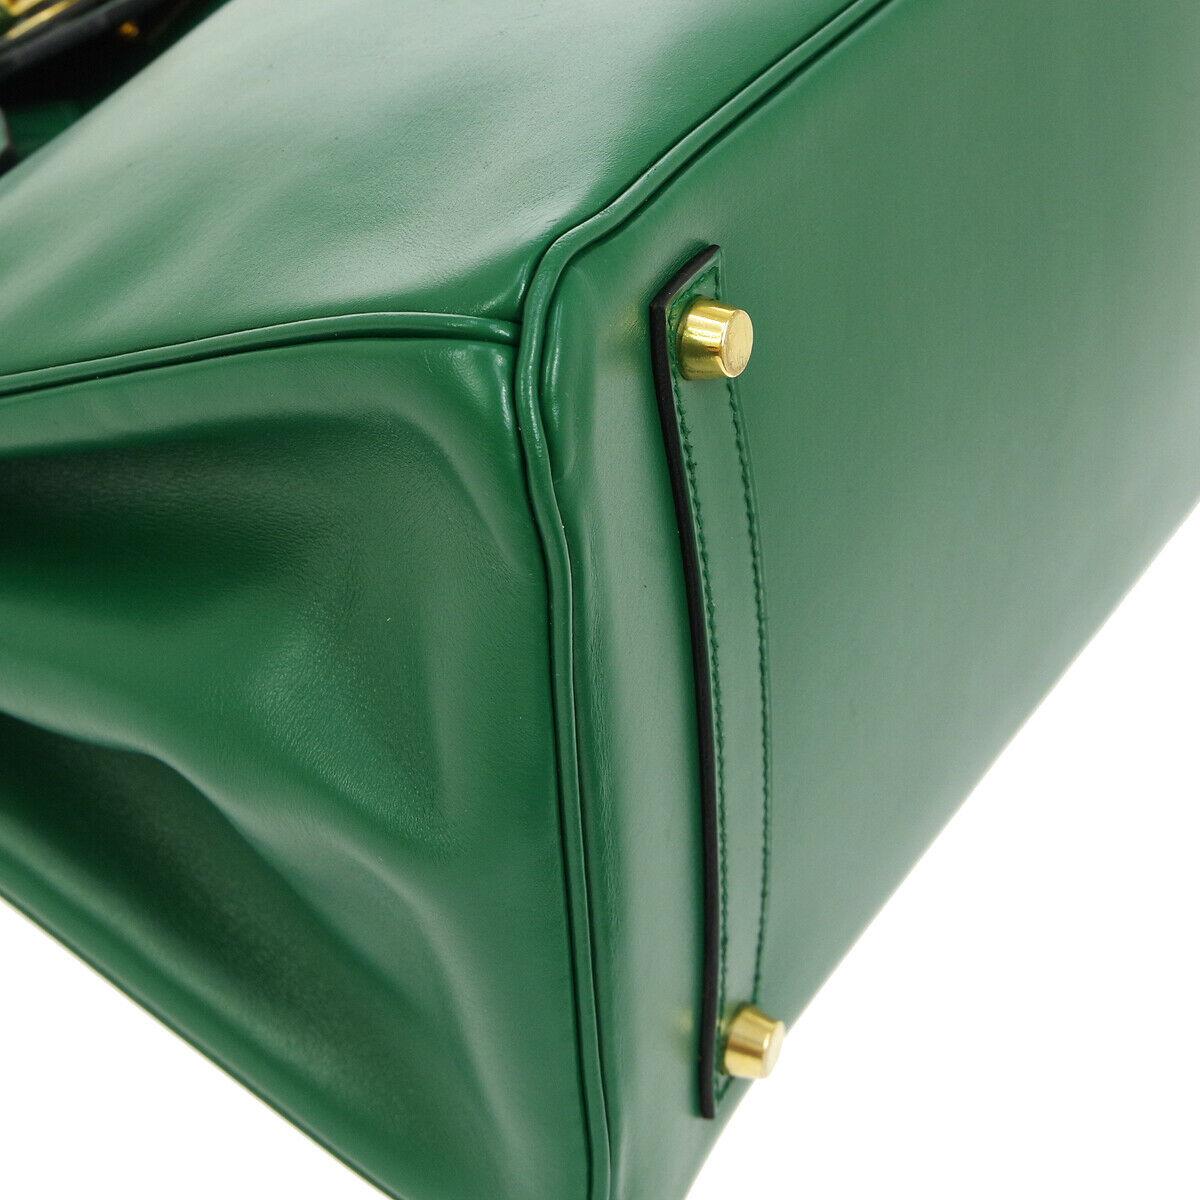 Hermes Birkin 35 Green Leather Gold Top Carryall Handle Satchel Travel Tote Bag 1